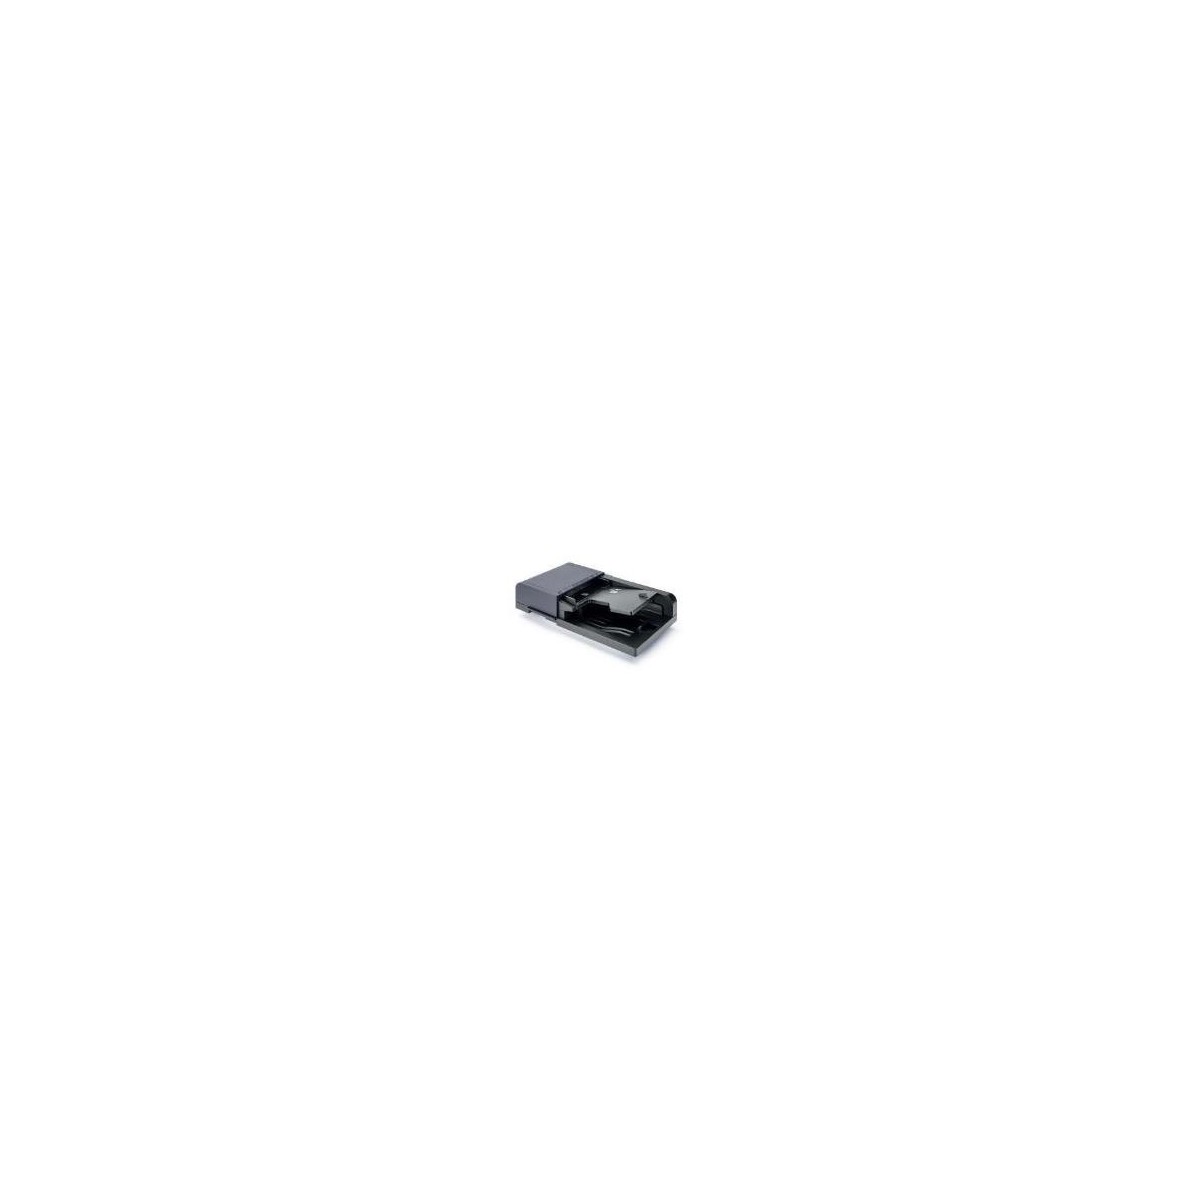 Kyocera DP-5100 - Auto document feeder (ADF) - KYOCERA - TASKalfa 356ci - 75 sheets - Black